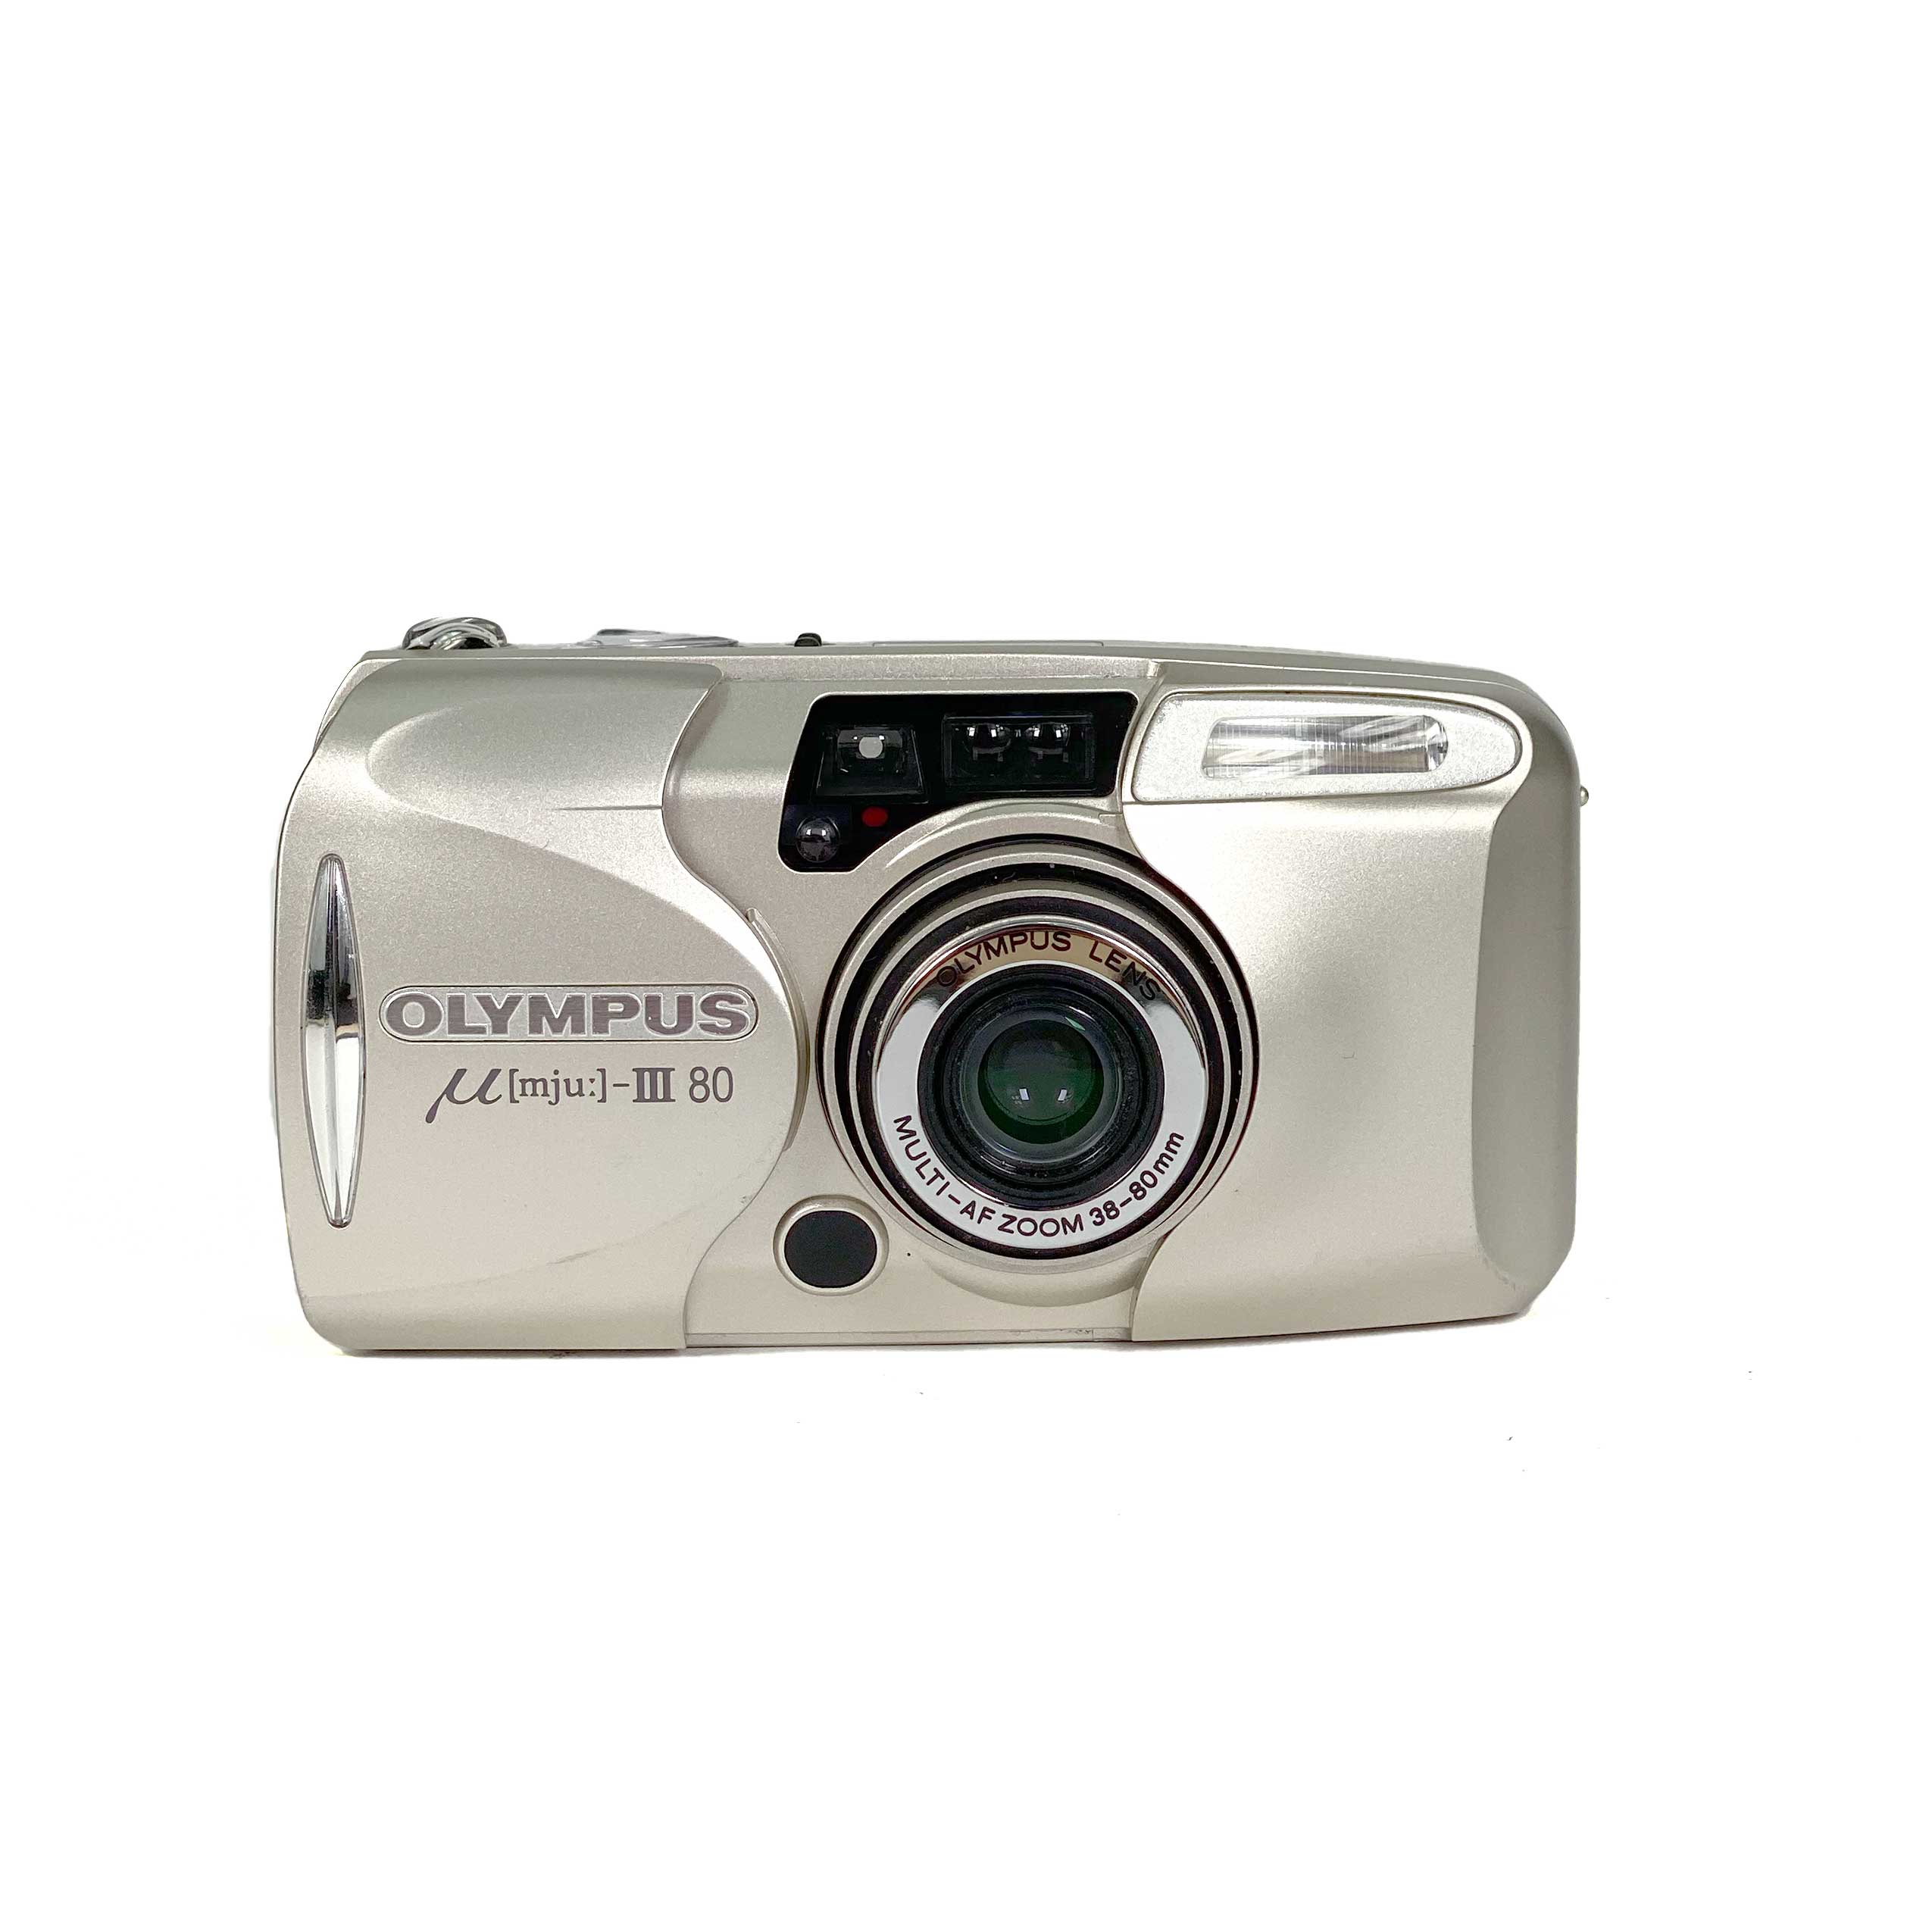 wenselijk thema Teleurgesteld Olympus Mju III 80 – Retro Camera Shop